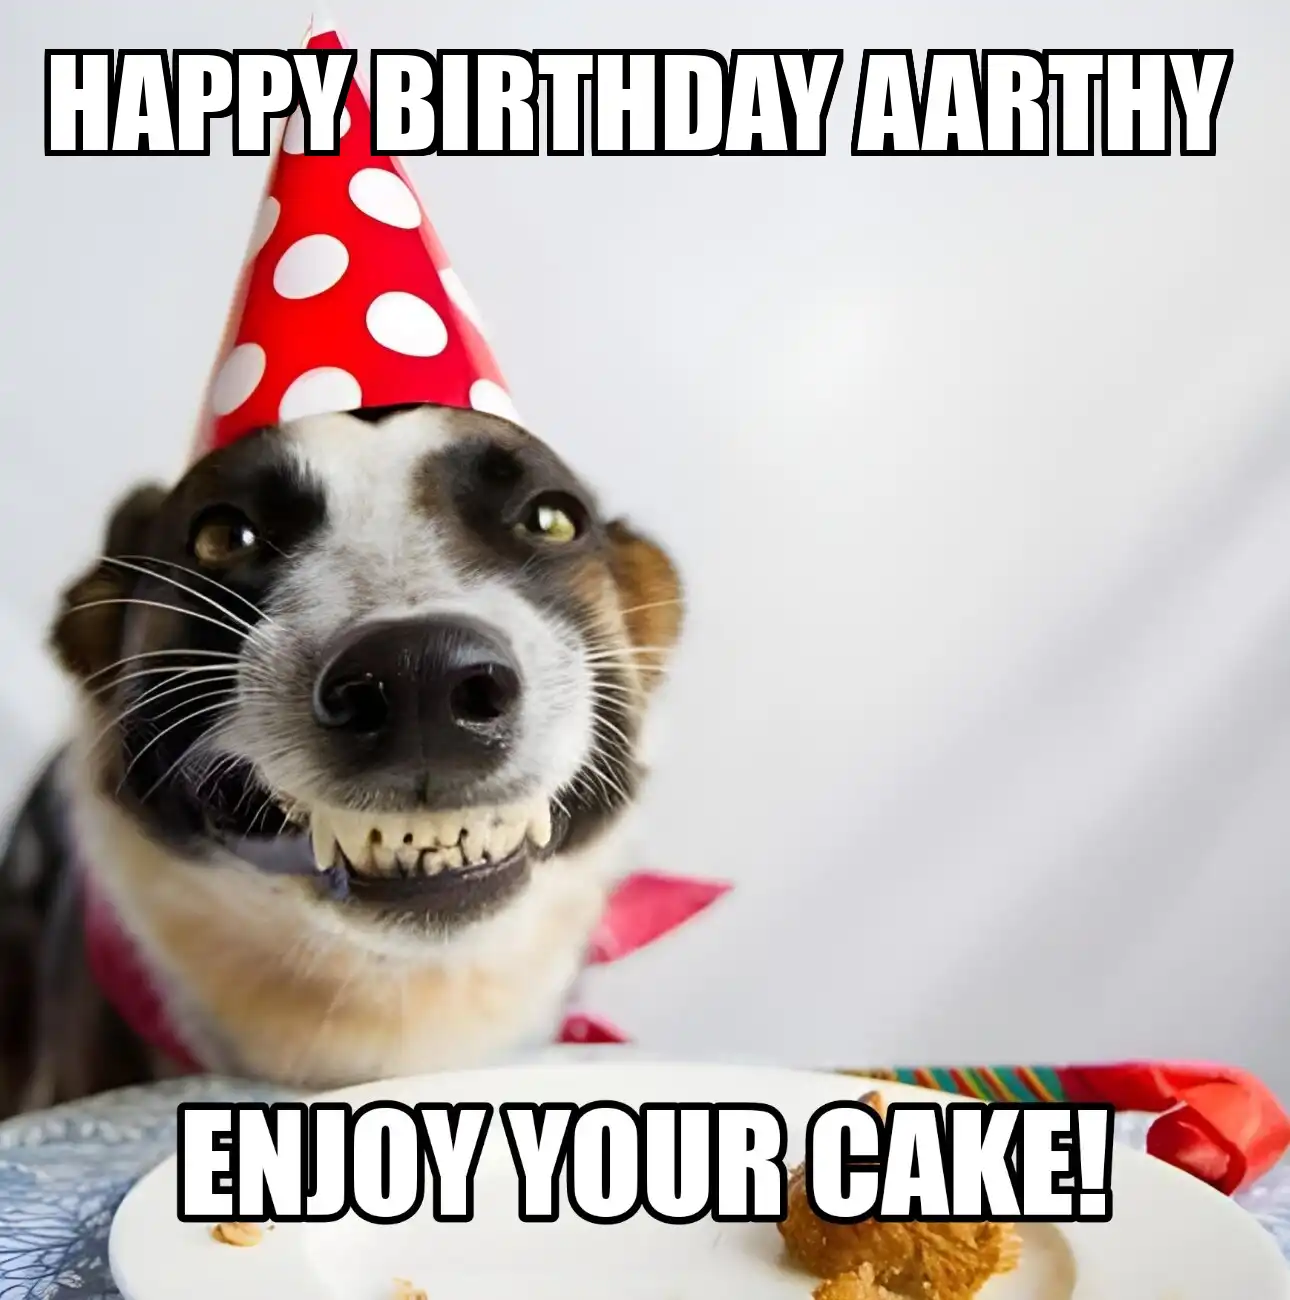 Happy Birthday Aarthy Enjoy Your Cake Dog Meme